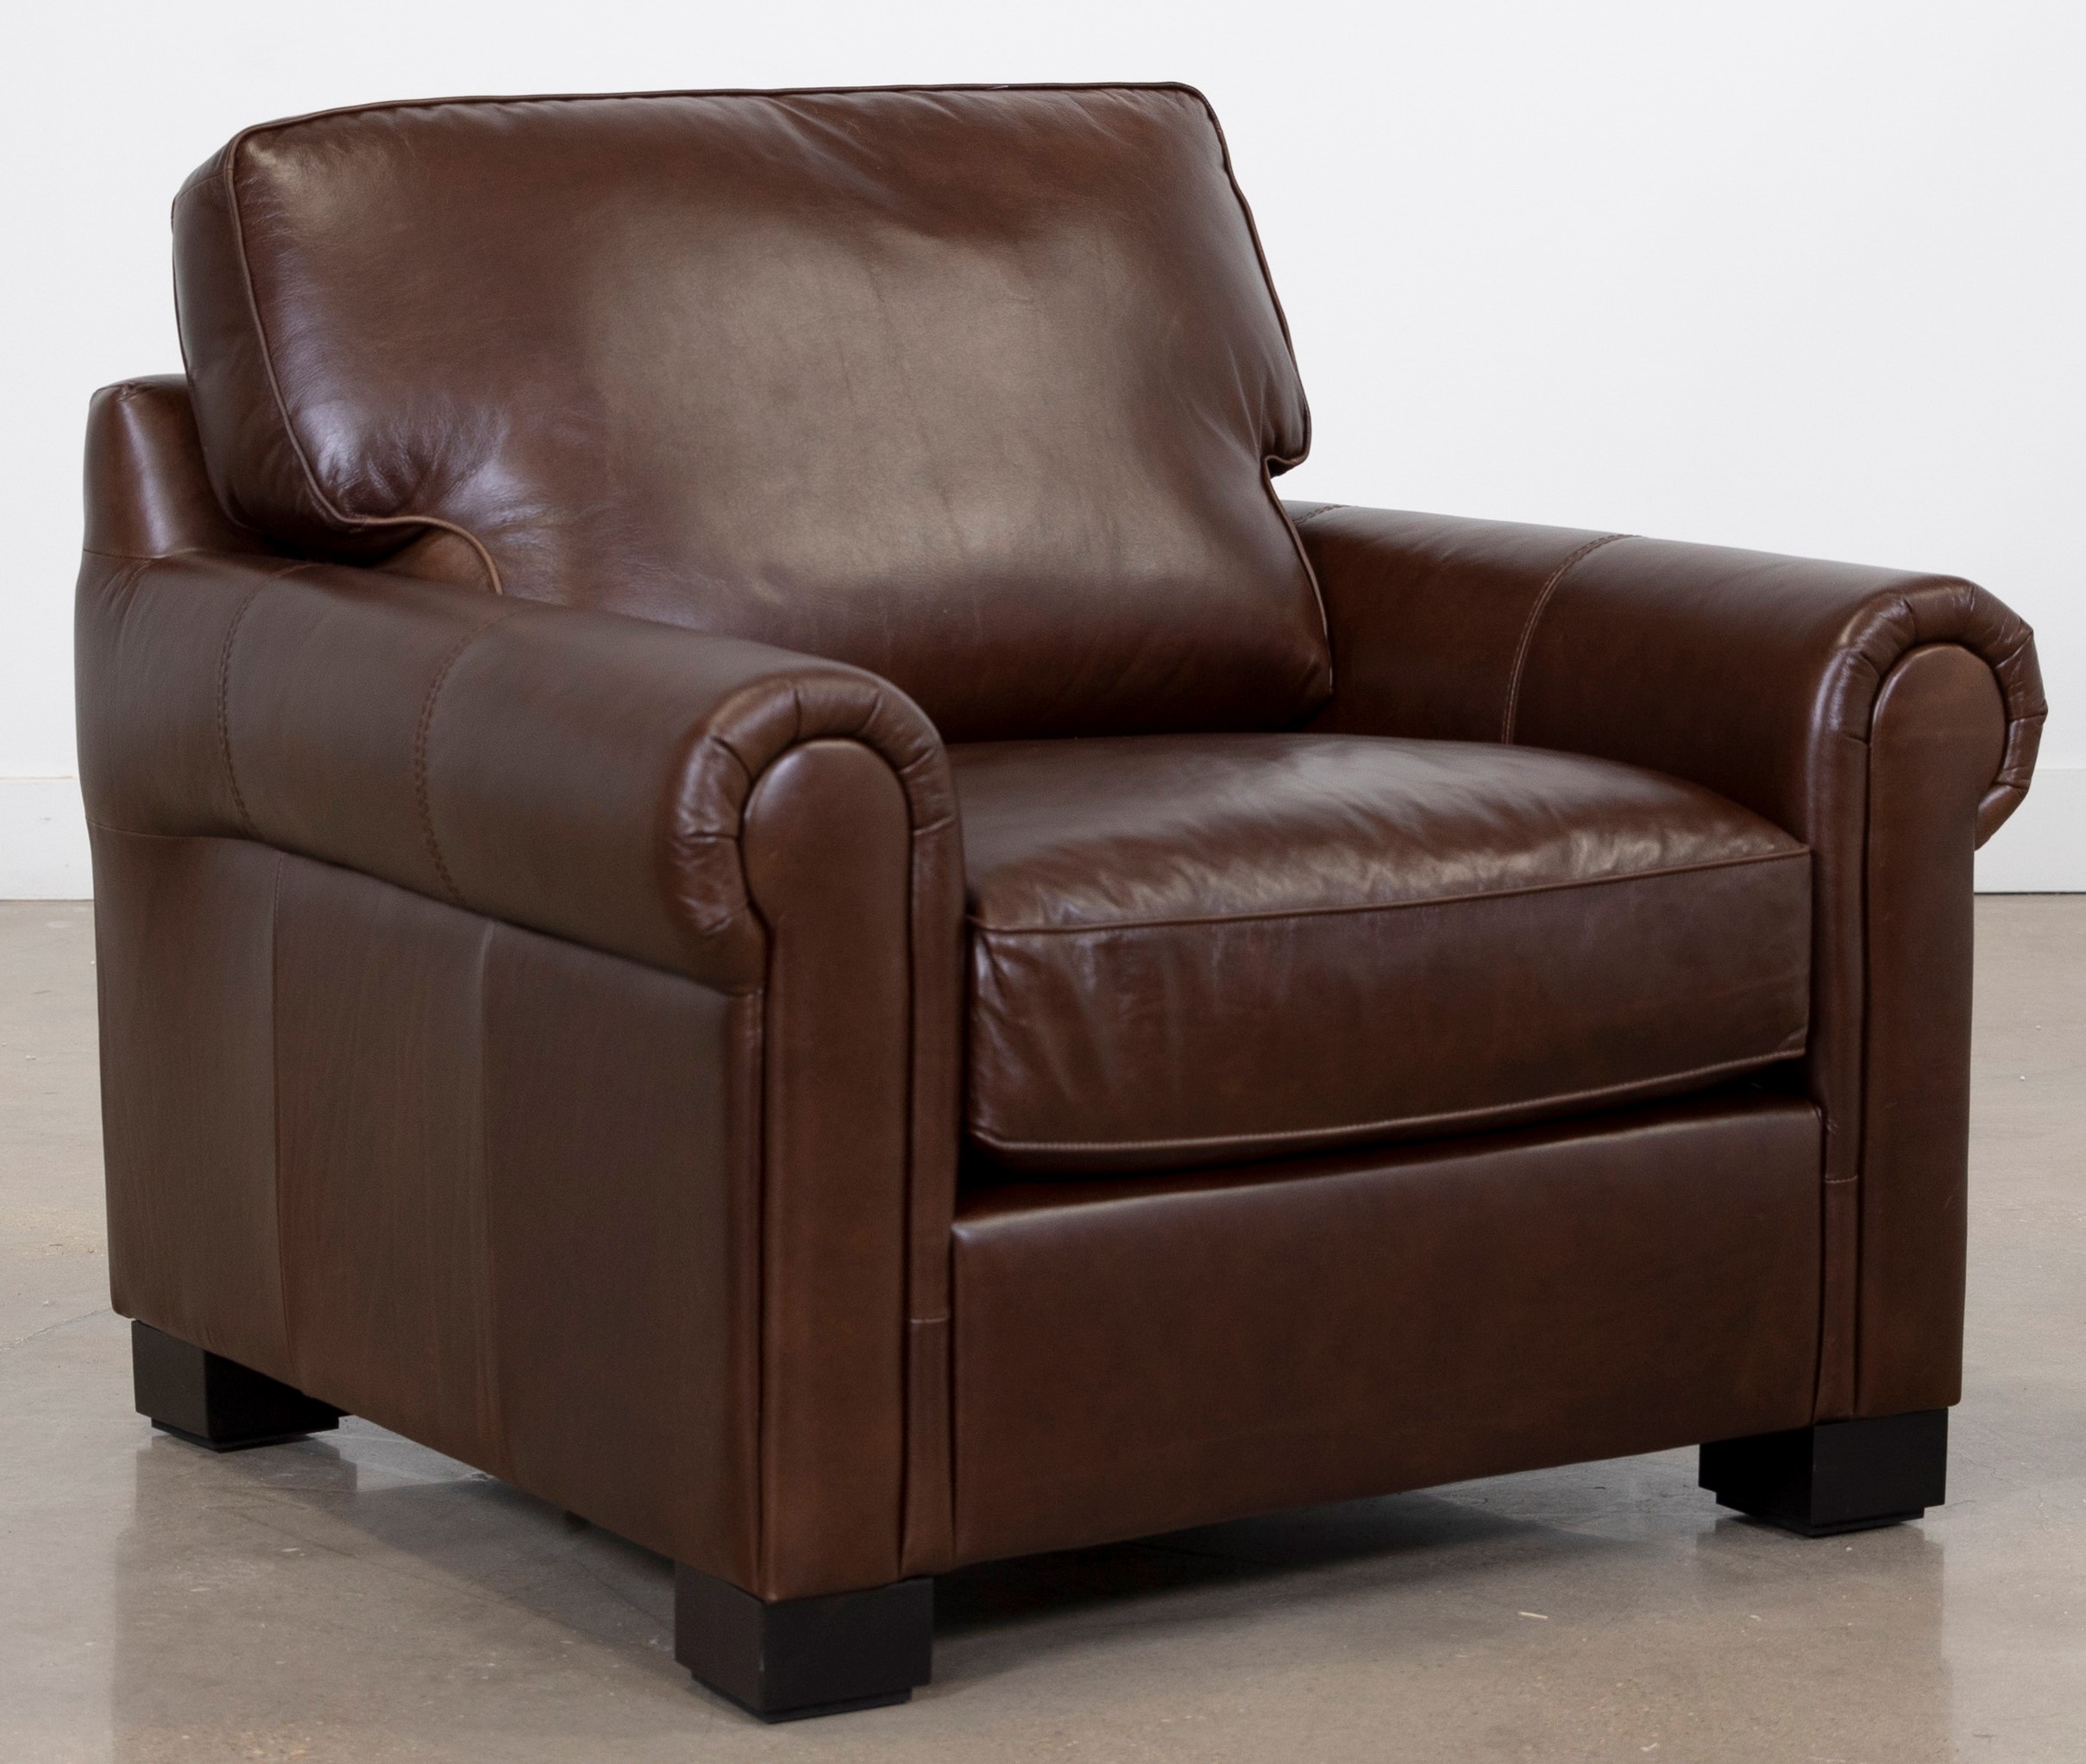 Furniture Source International Dark Chocolate All Leather Chair